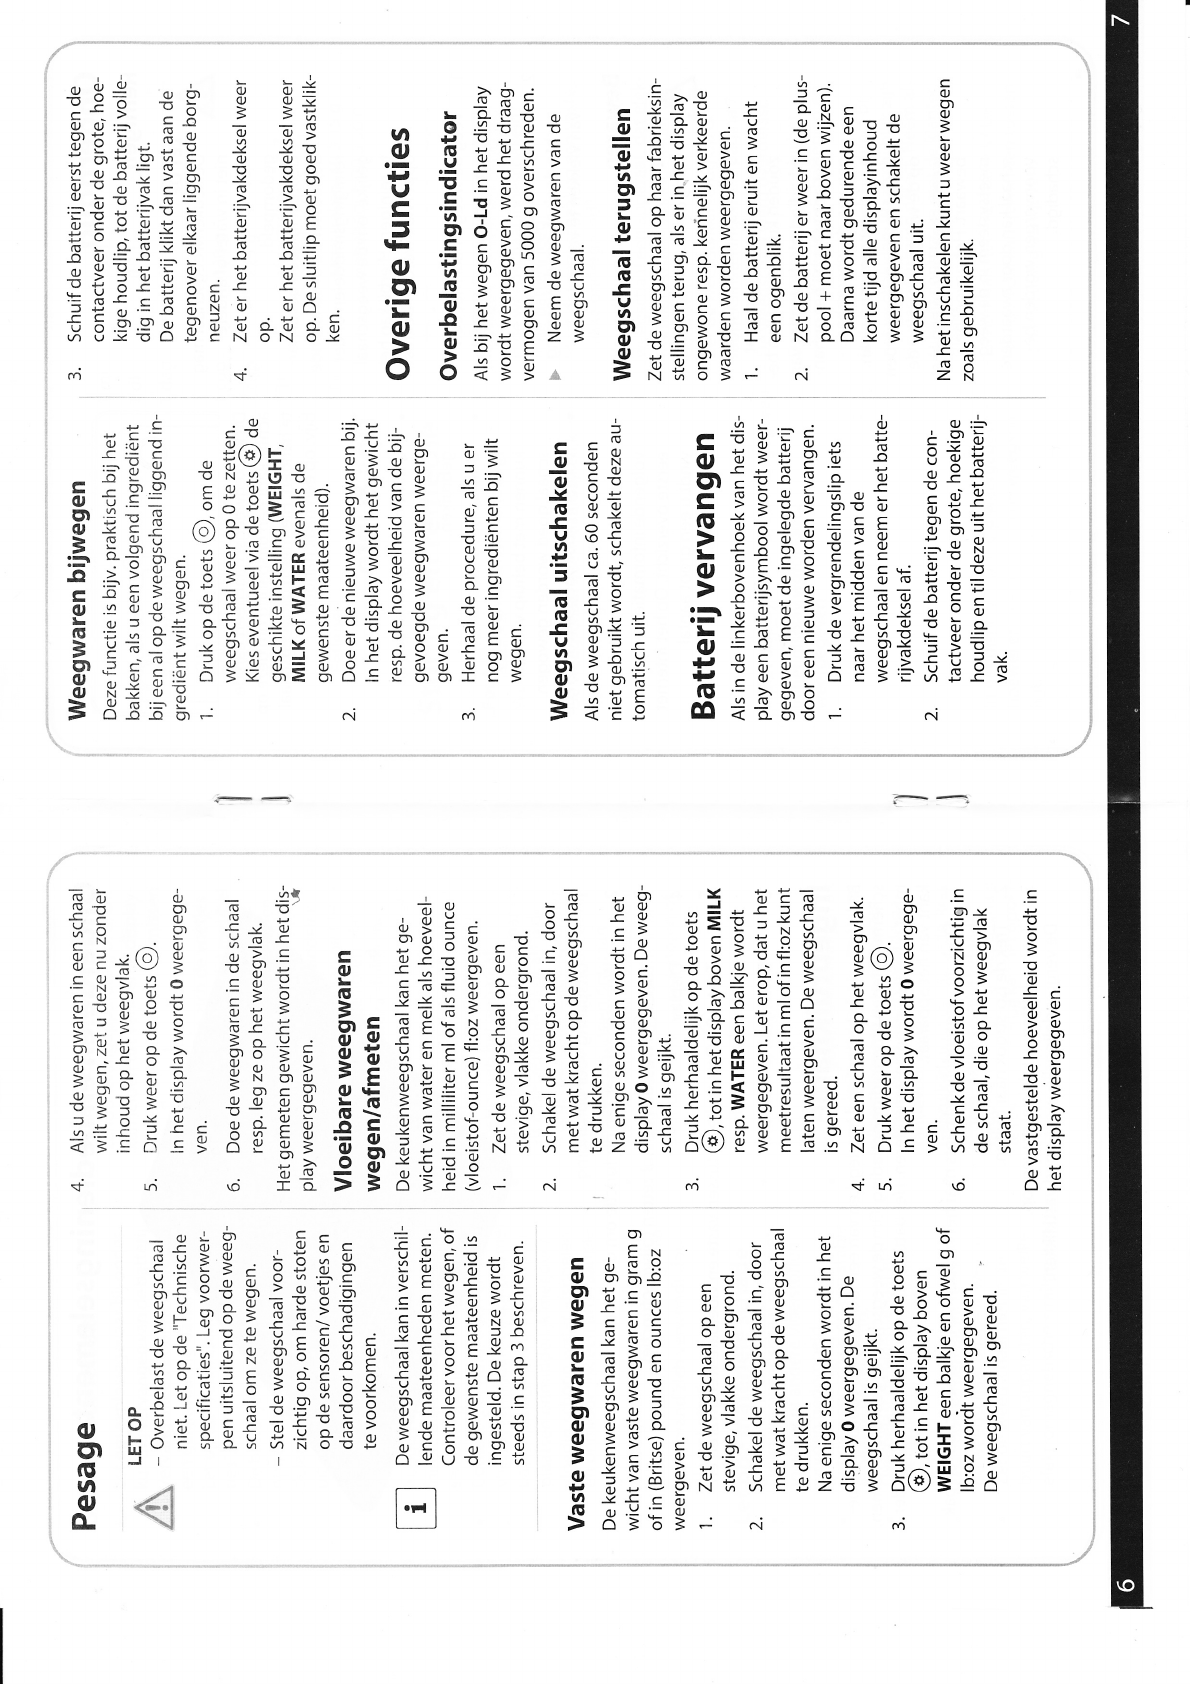 Handleiding Quigg Gt Ksg 07 Pagina 6 Van 6 Nederlands